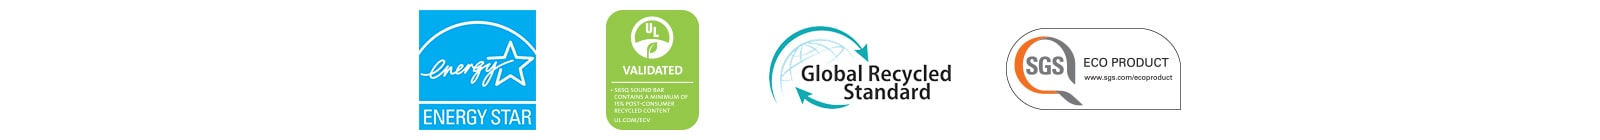 De gauche à droite, ENERGY STAR (logo), UL VALIDATED (logo), Global Recycled Standard (logo), SGS ECO PRODUCT (logo) sont affichés.